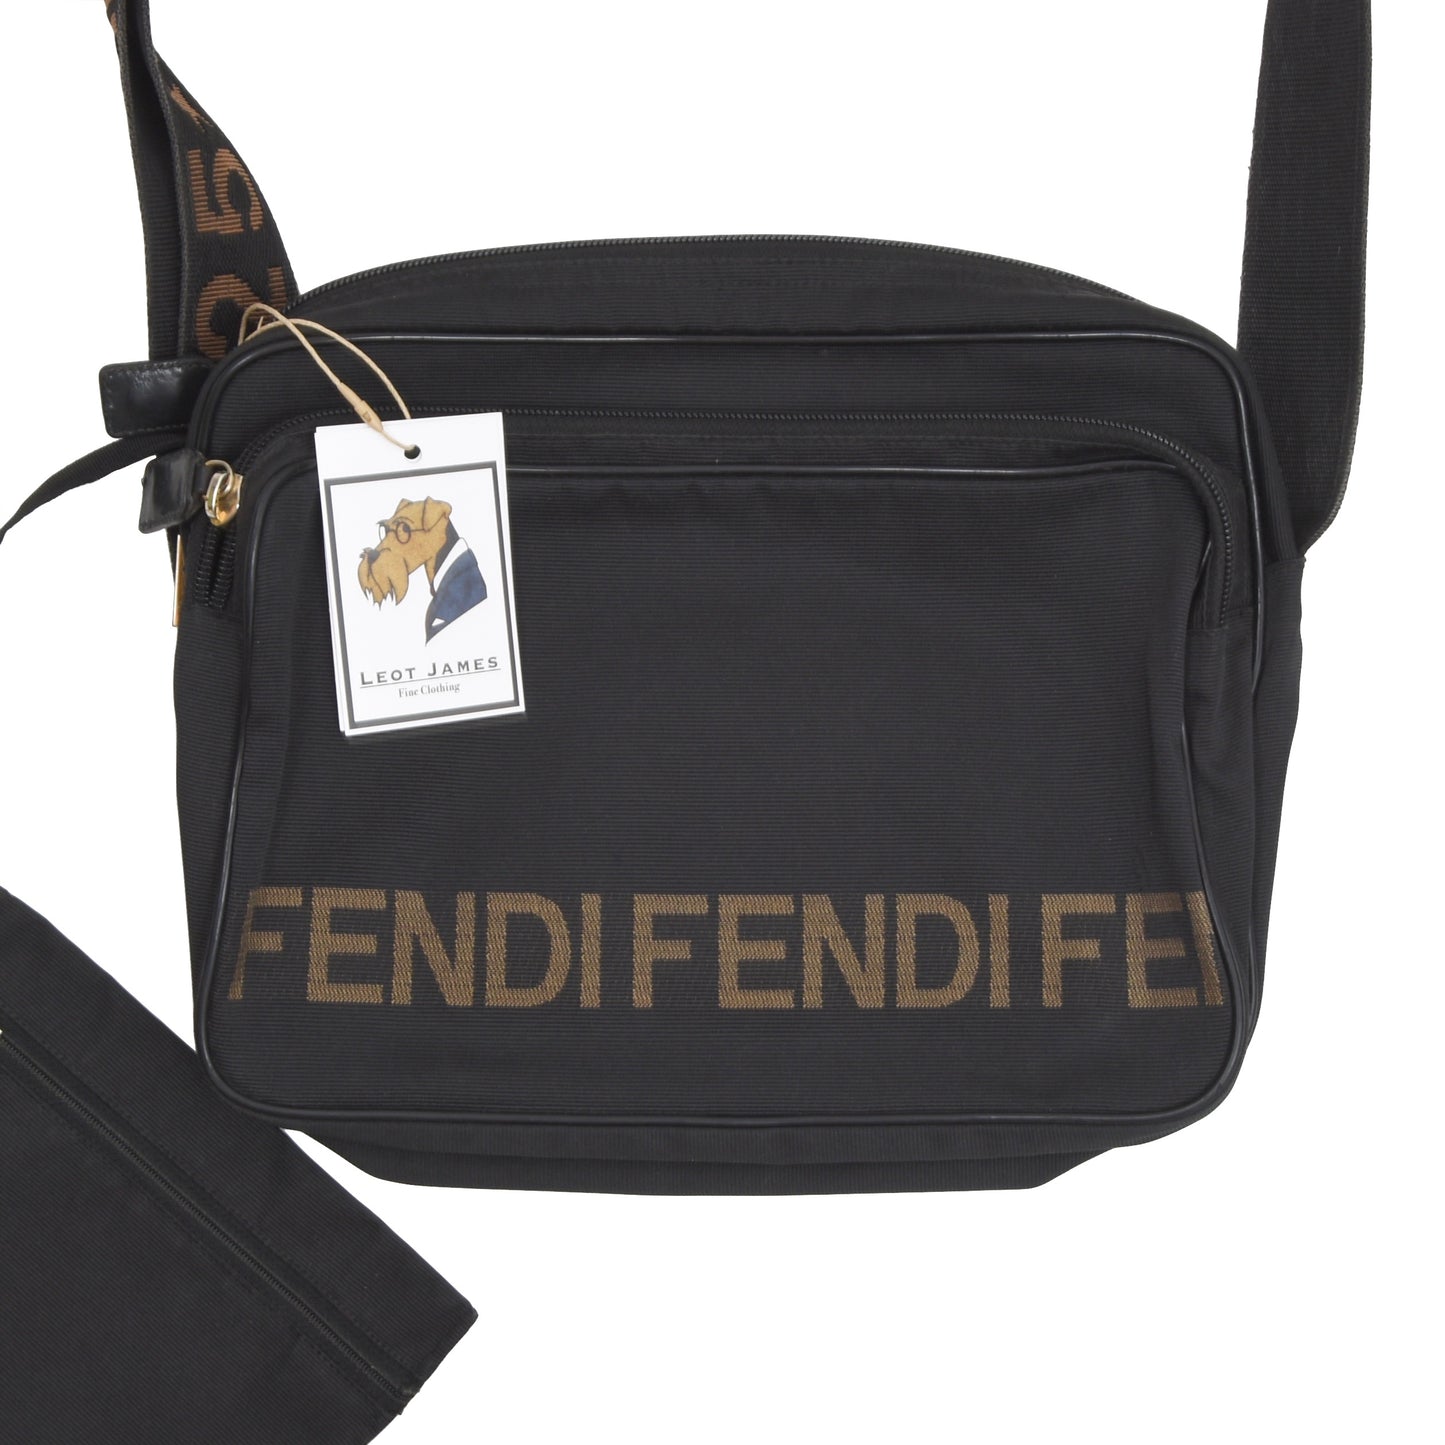 Vintage Fendi Cross Body Bag - Black